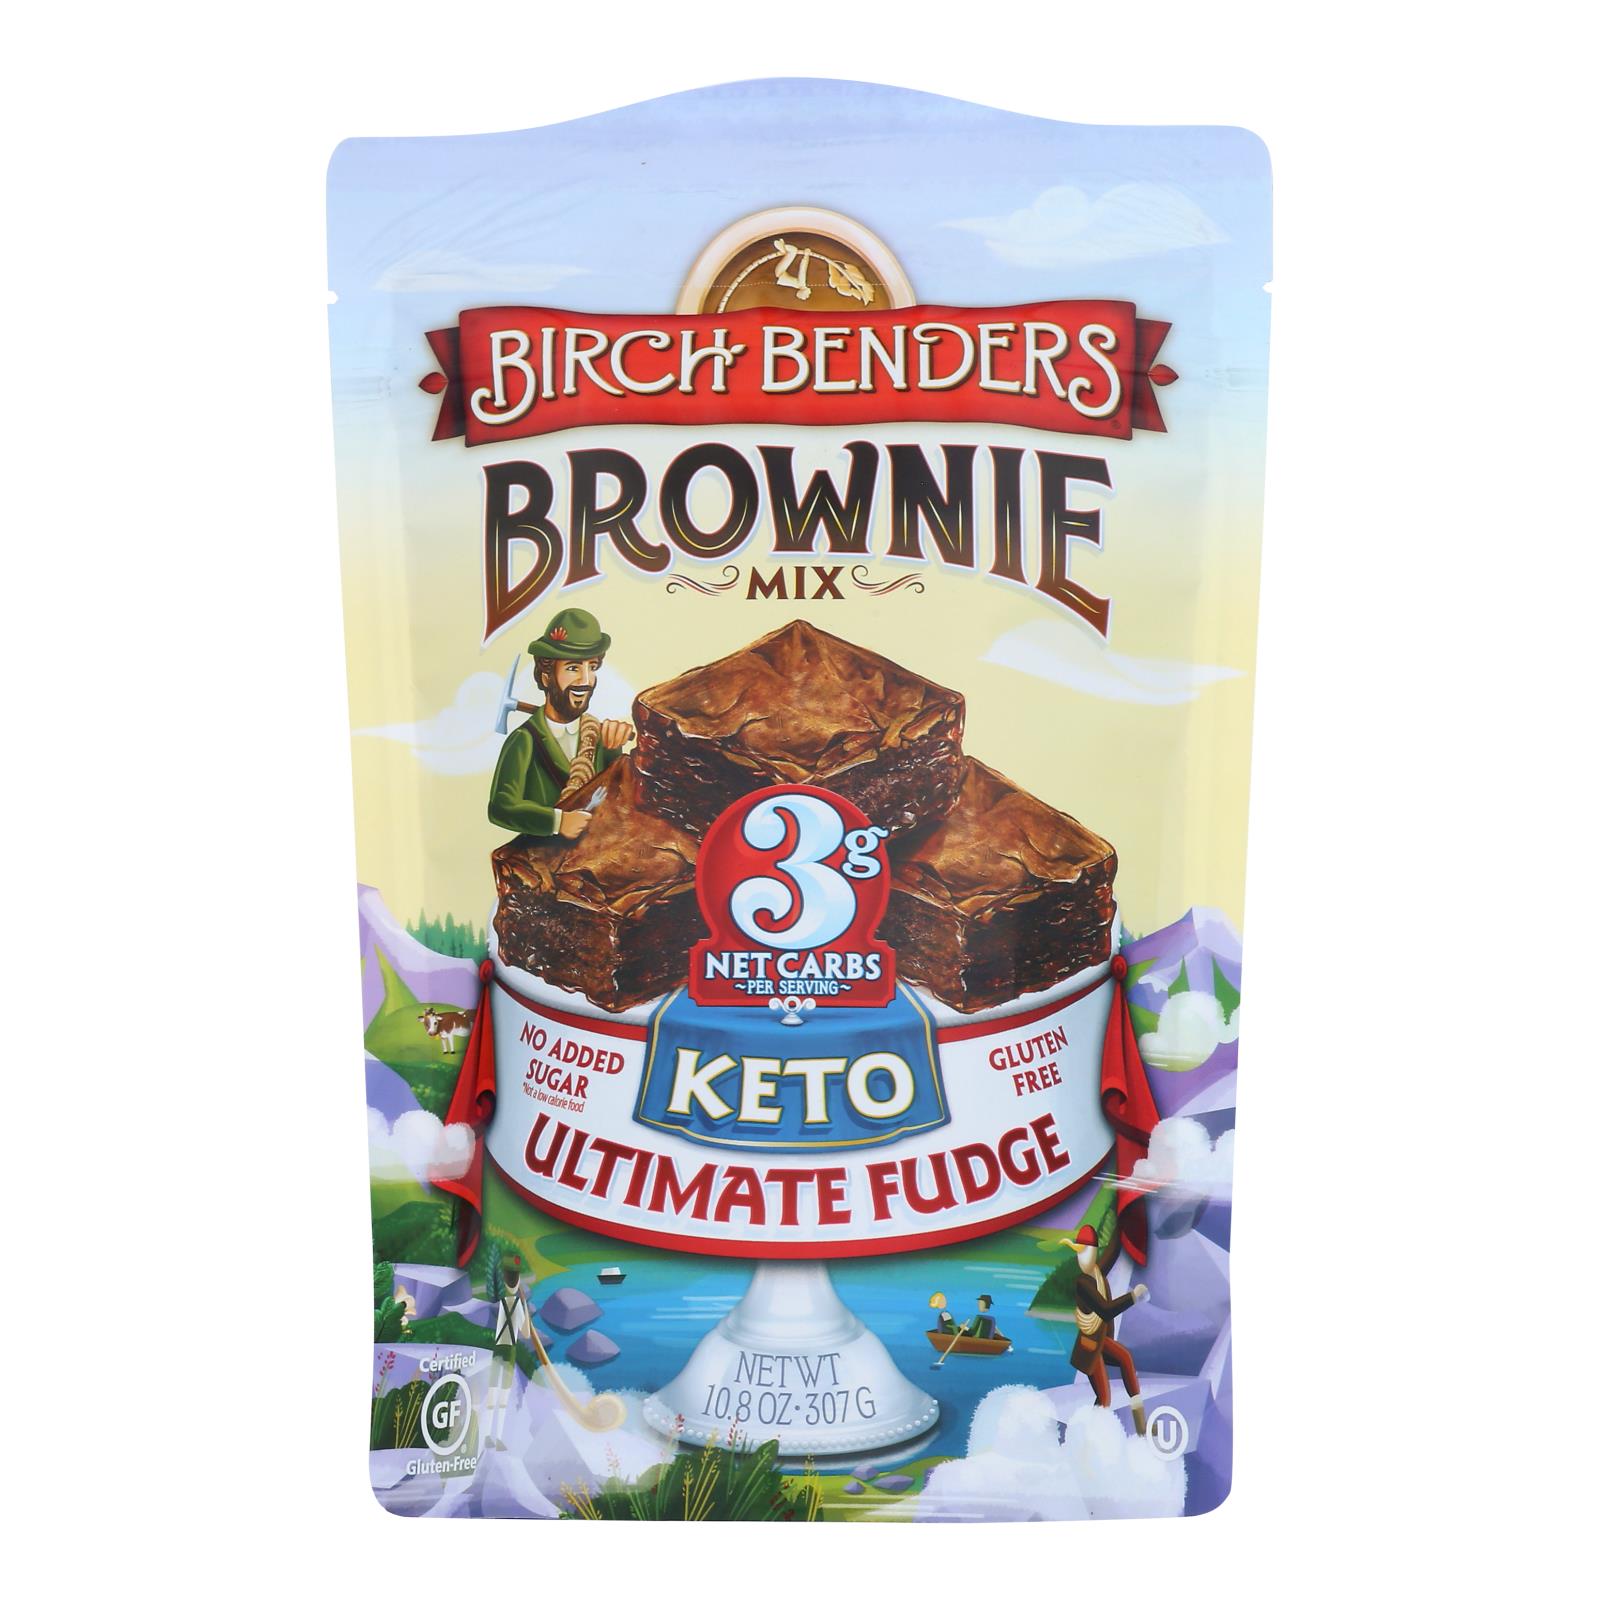 Birch Benders - Brwni Mix Ult Fudge Keto - Case Of 6-10.8 Oz